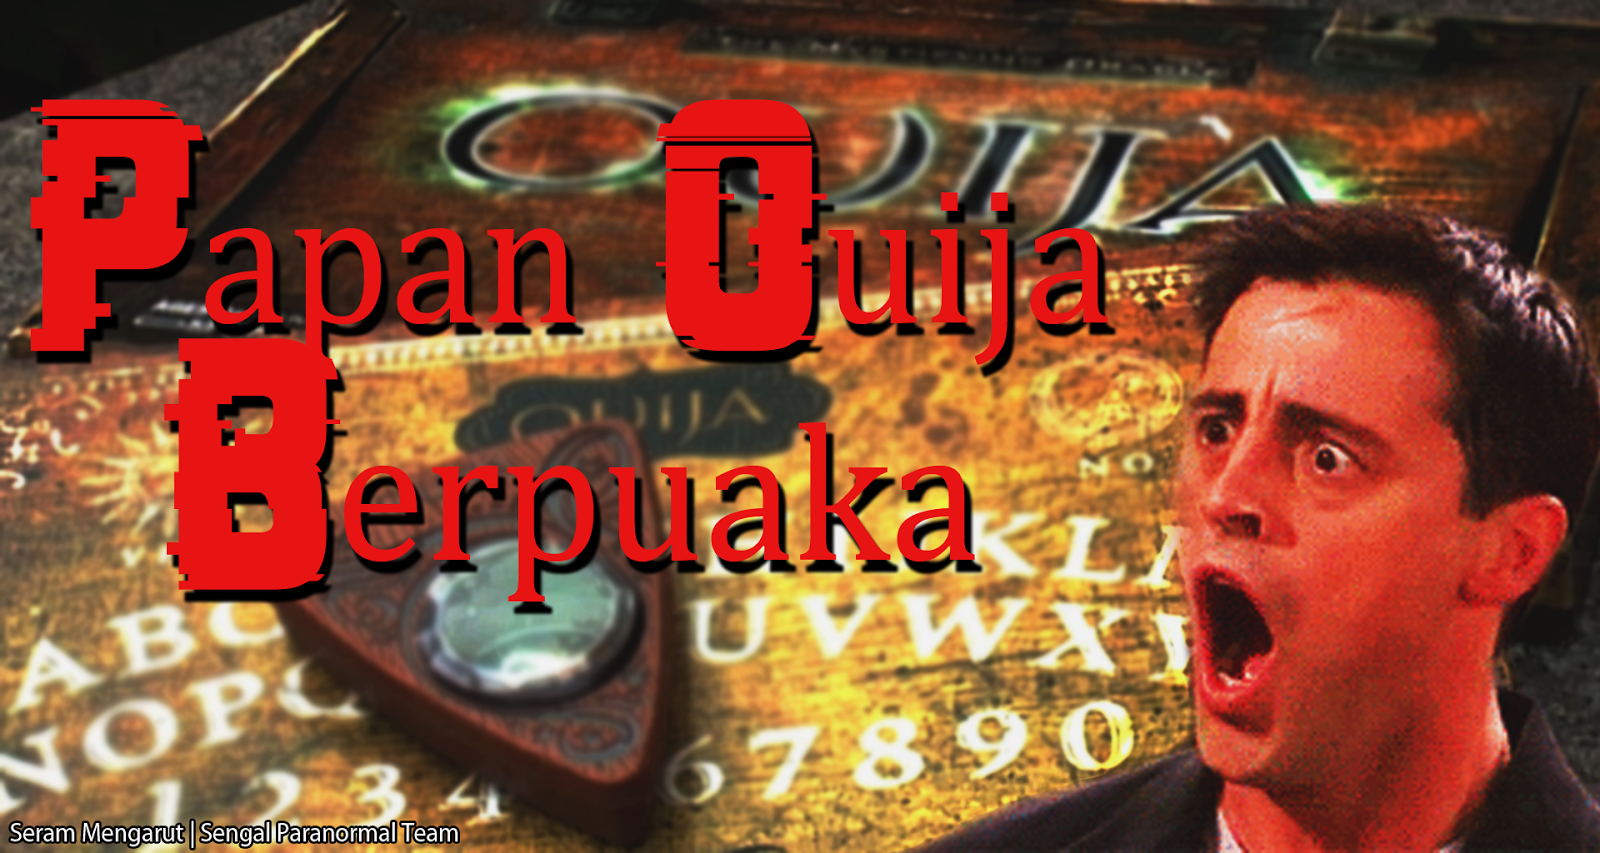 Cerita Seram Mengarut: Puaka Papan Ouija.